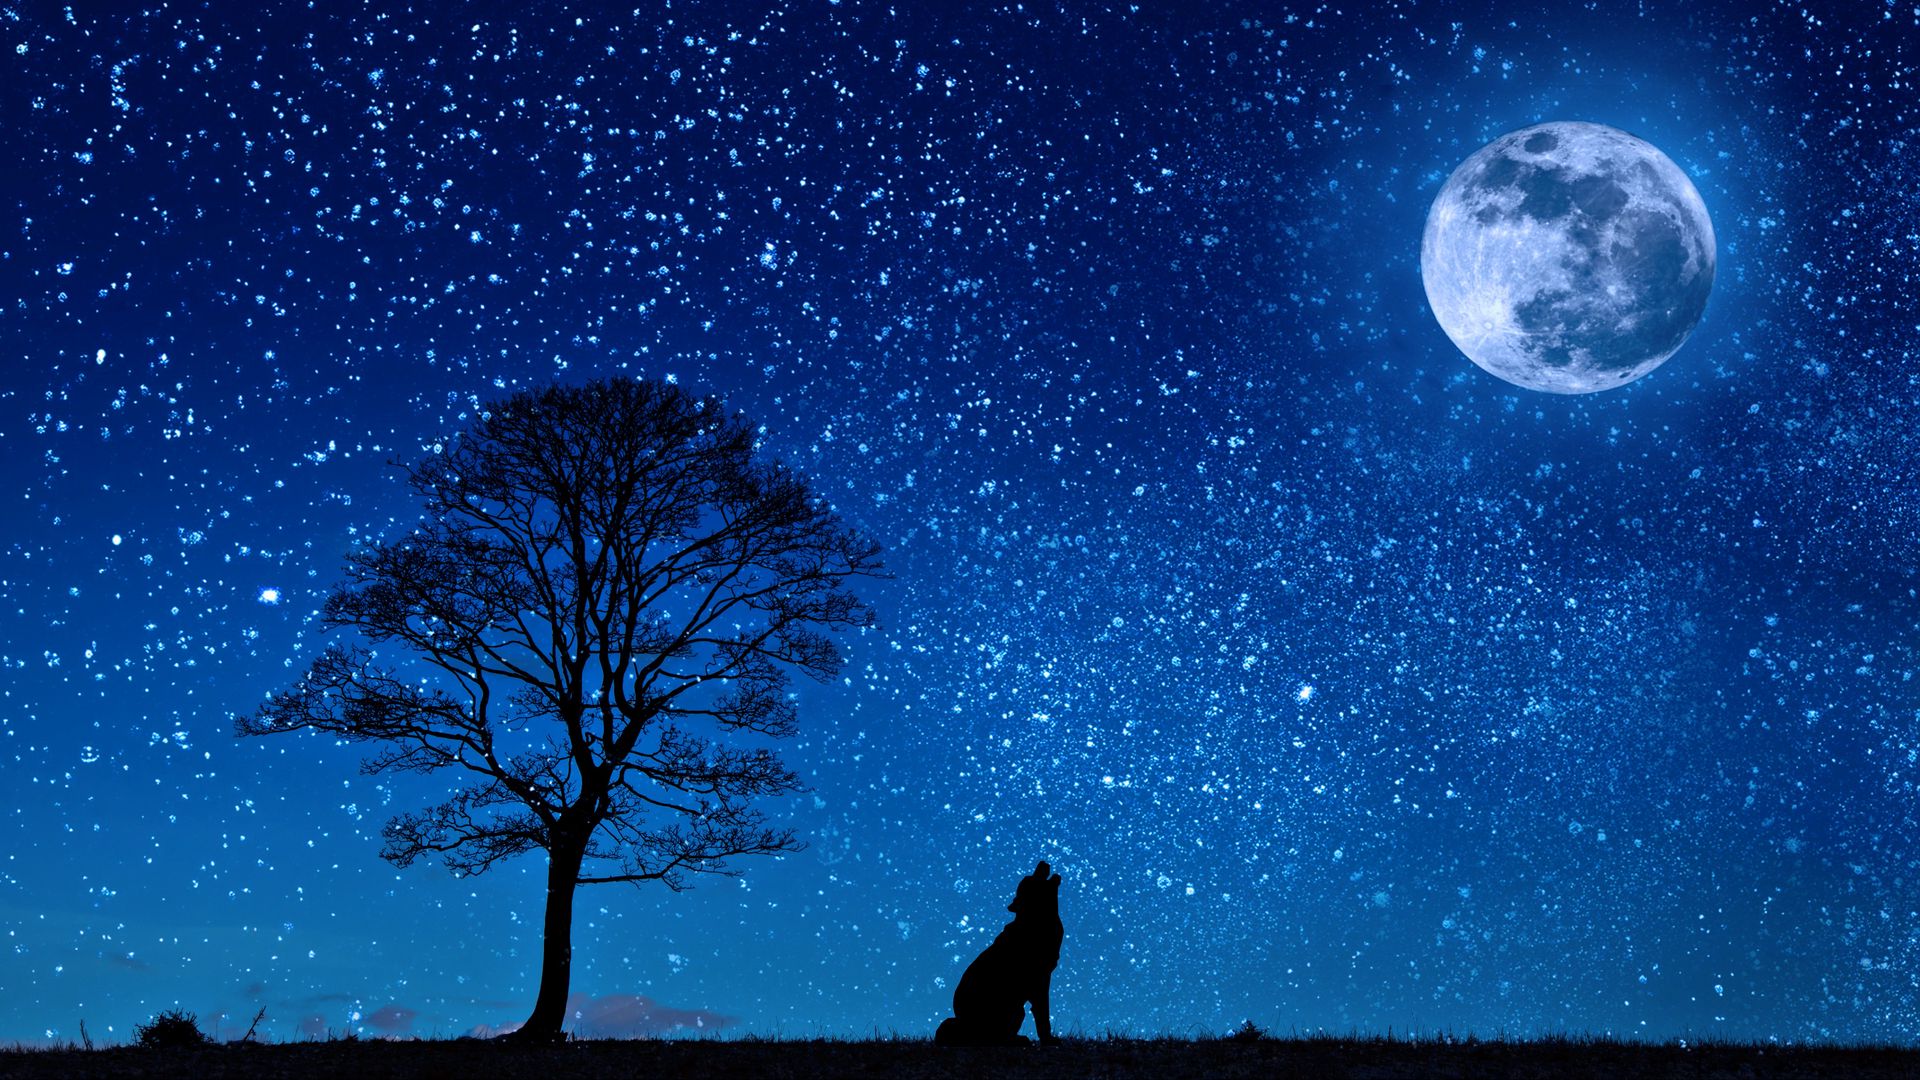 Wolf, Starry, Sky, Tree, Moon Wallpaper Free Download